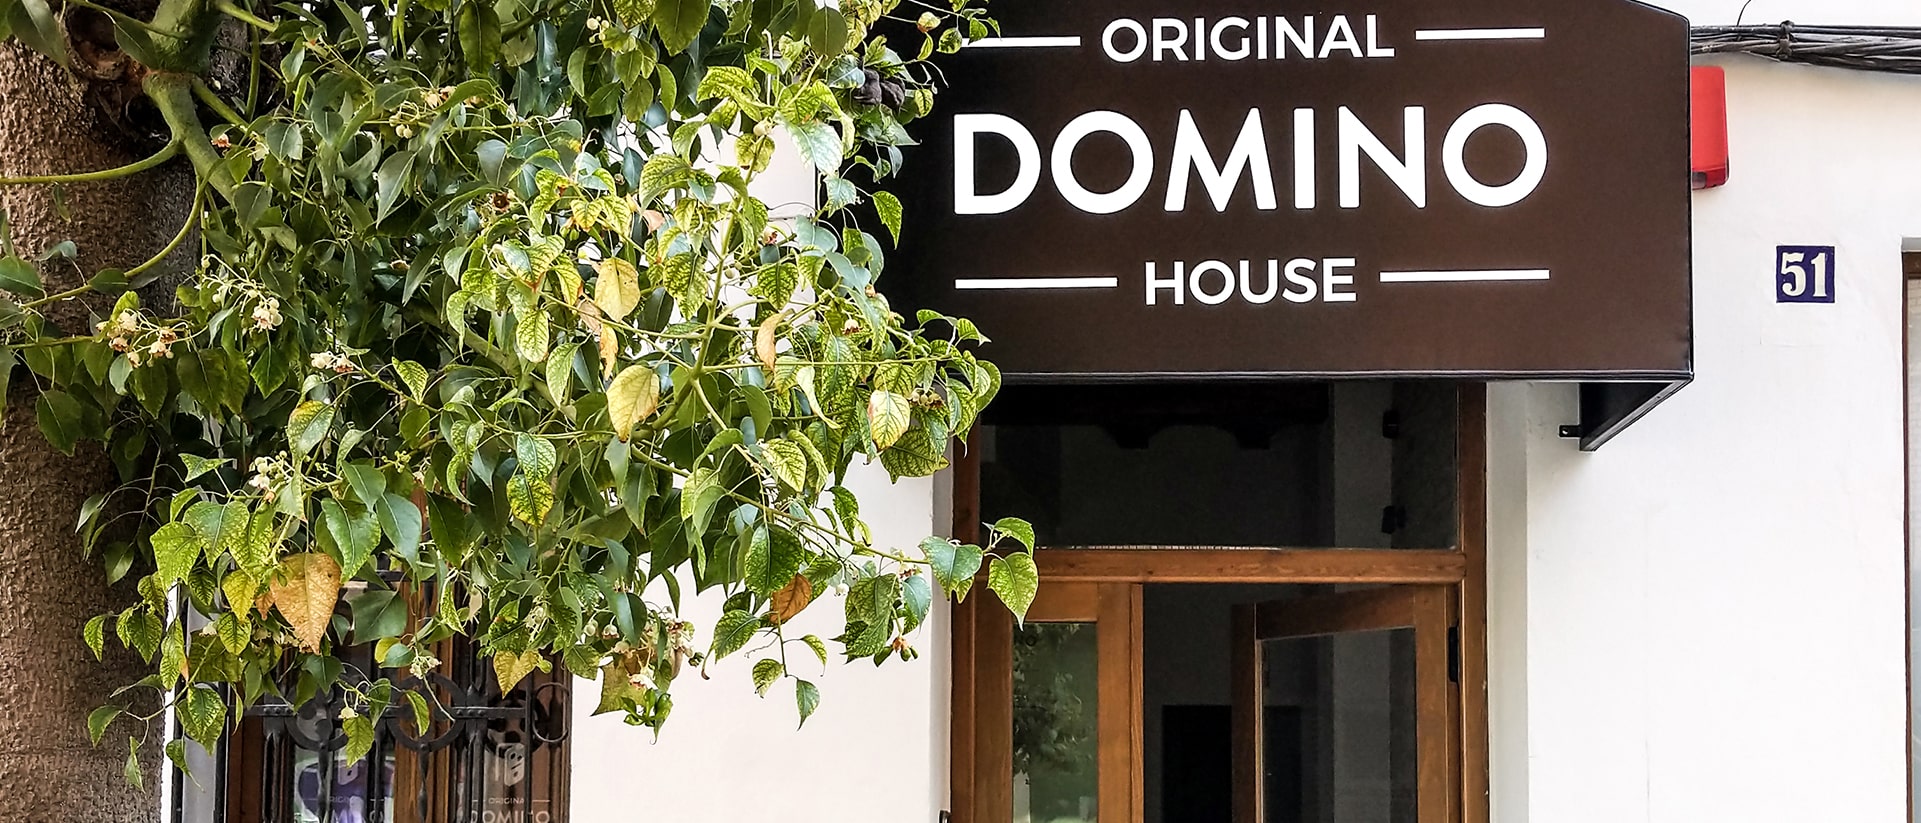 Original Domino House - Main entrance